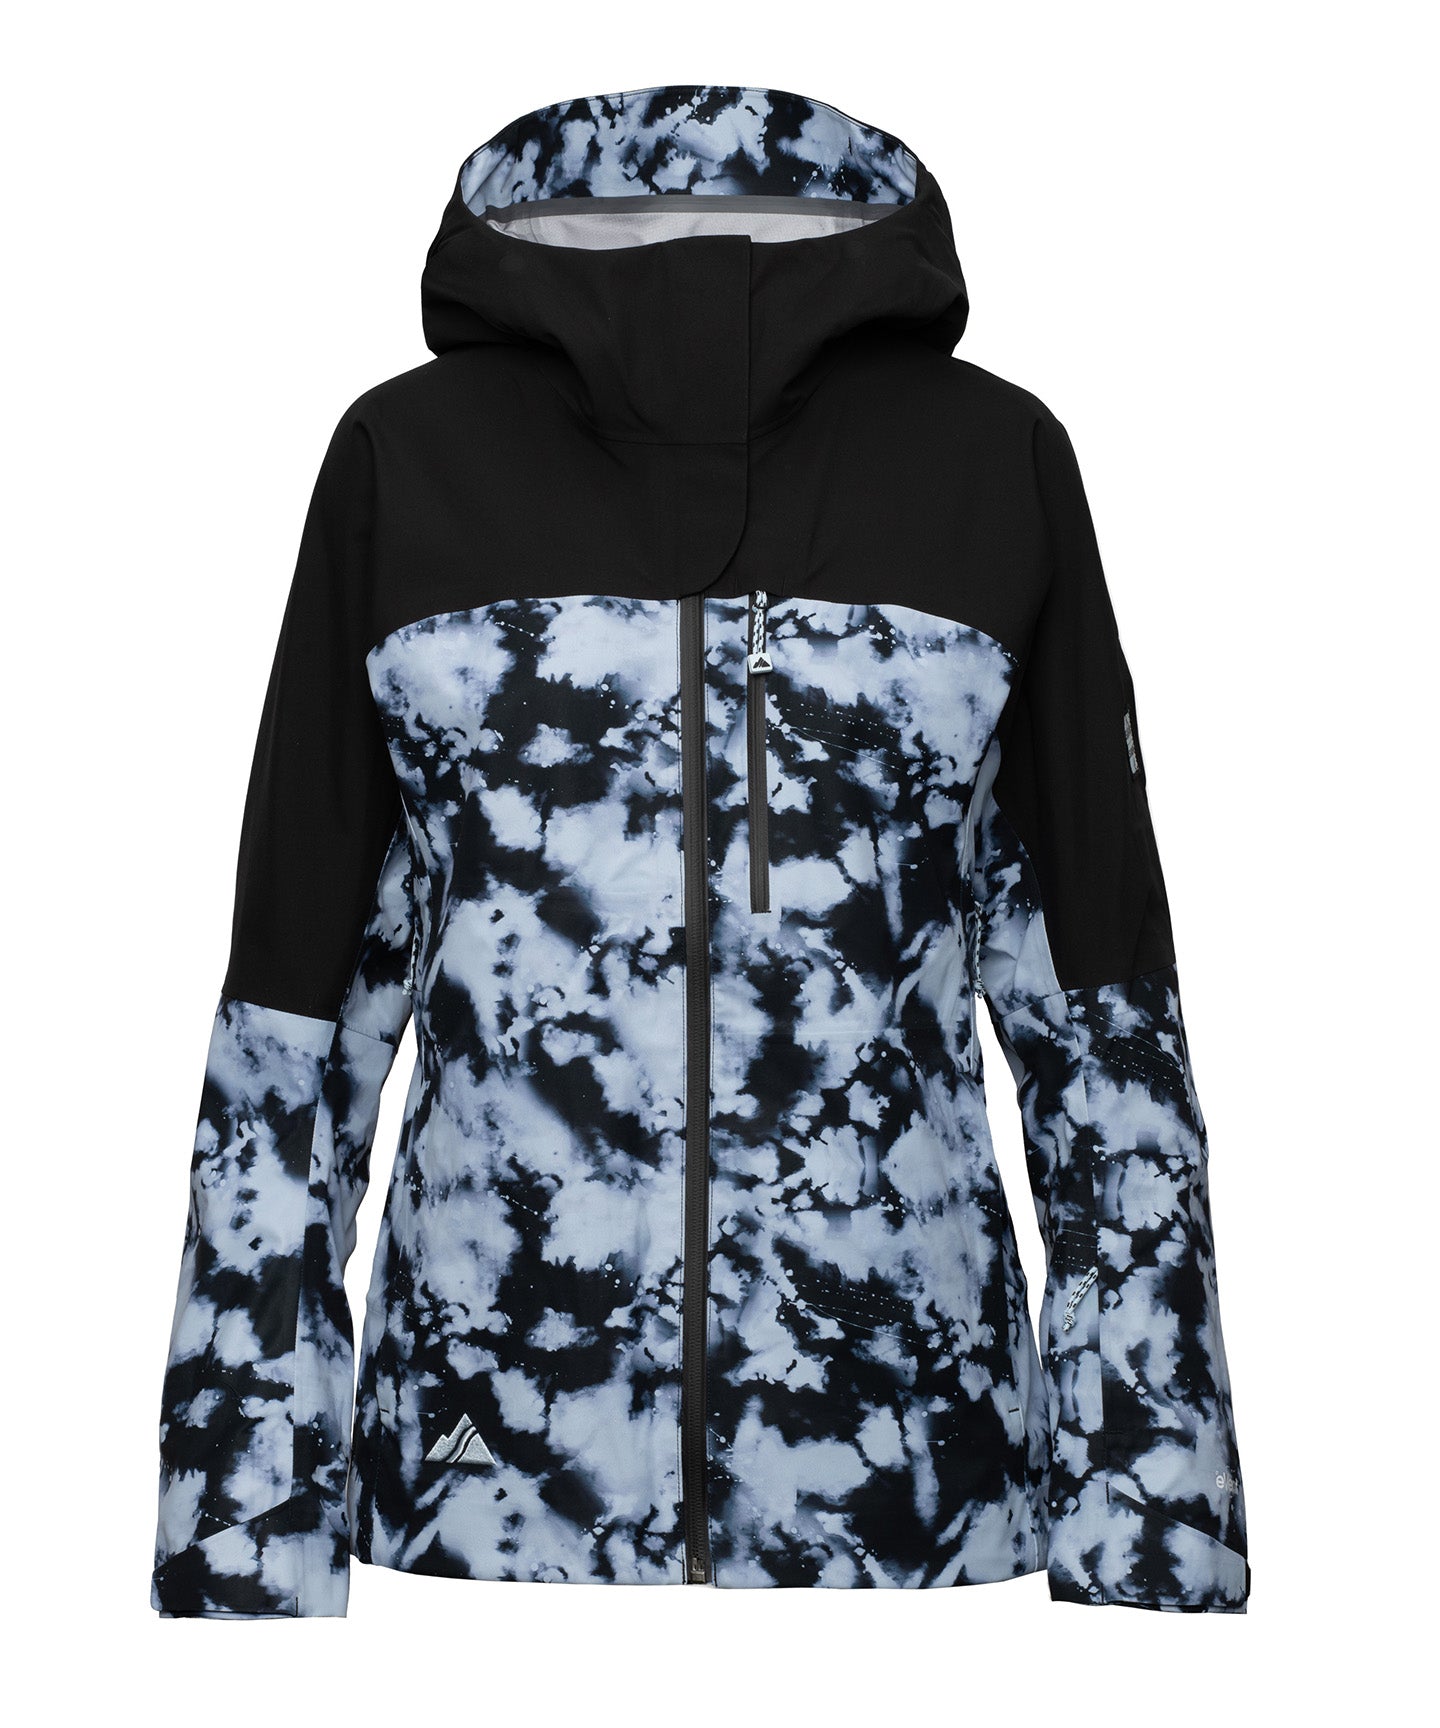 studio image of strafe outerwear 2023 strafe x shredly meadow jacket in tie dye splatter color